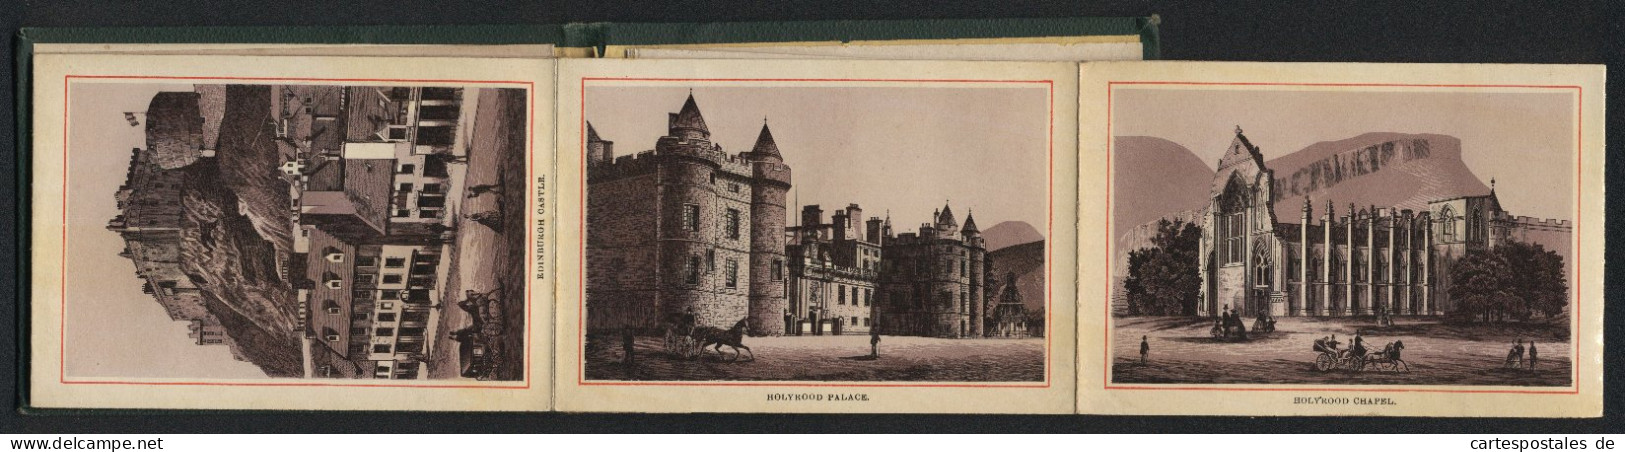 Leporello-Album Edinburgh Mit 12 Lithographie-Ansichten, Princes Street, Old Town, Scott Monument, John Knox House  - Litografia